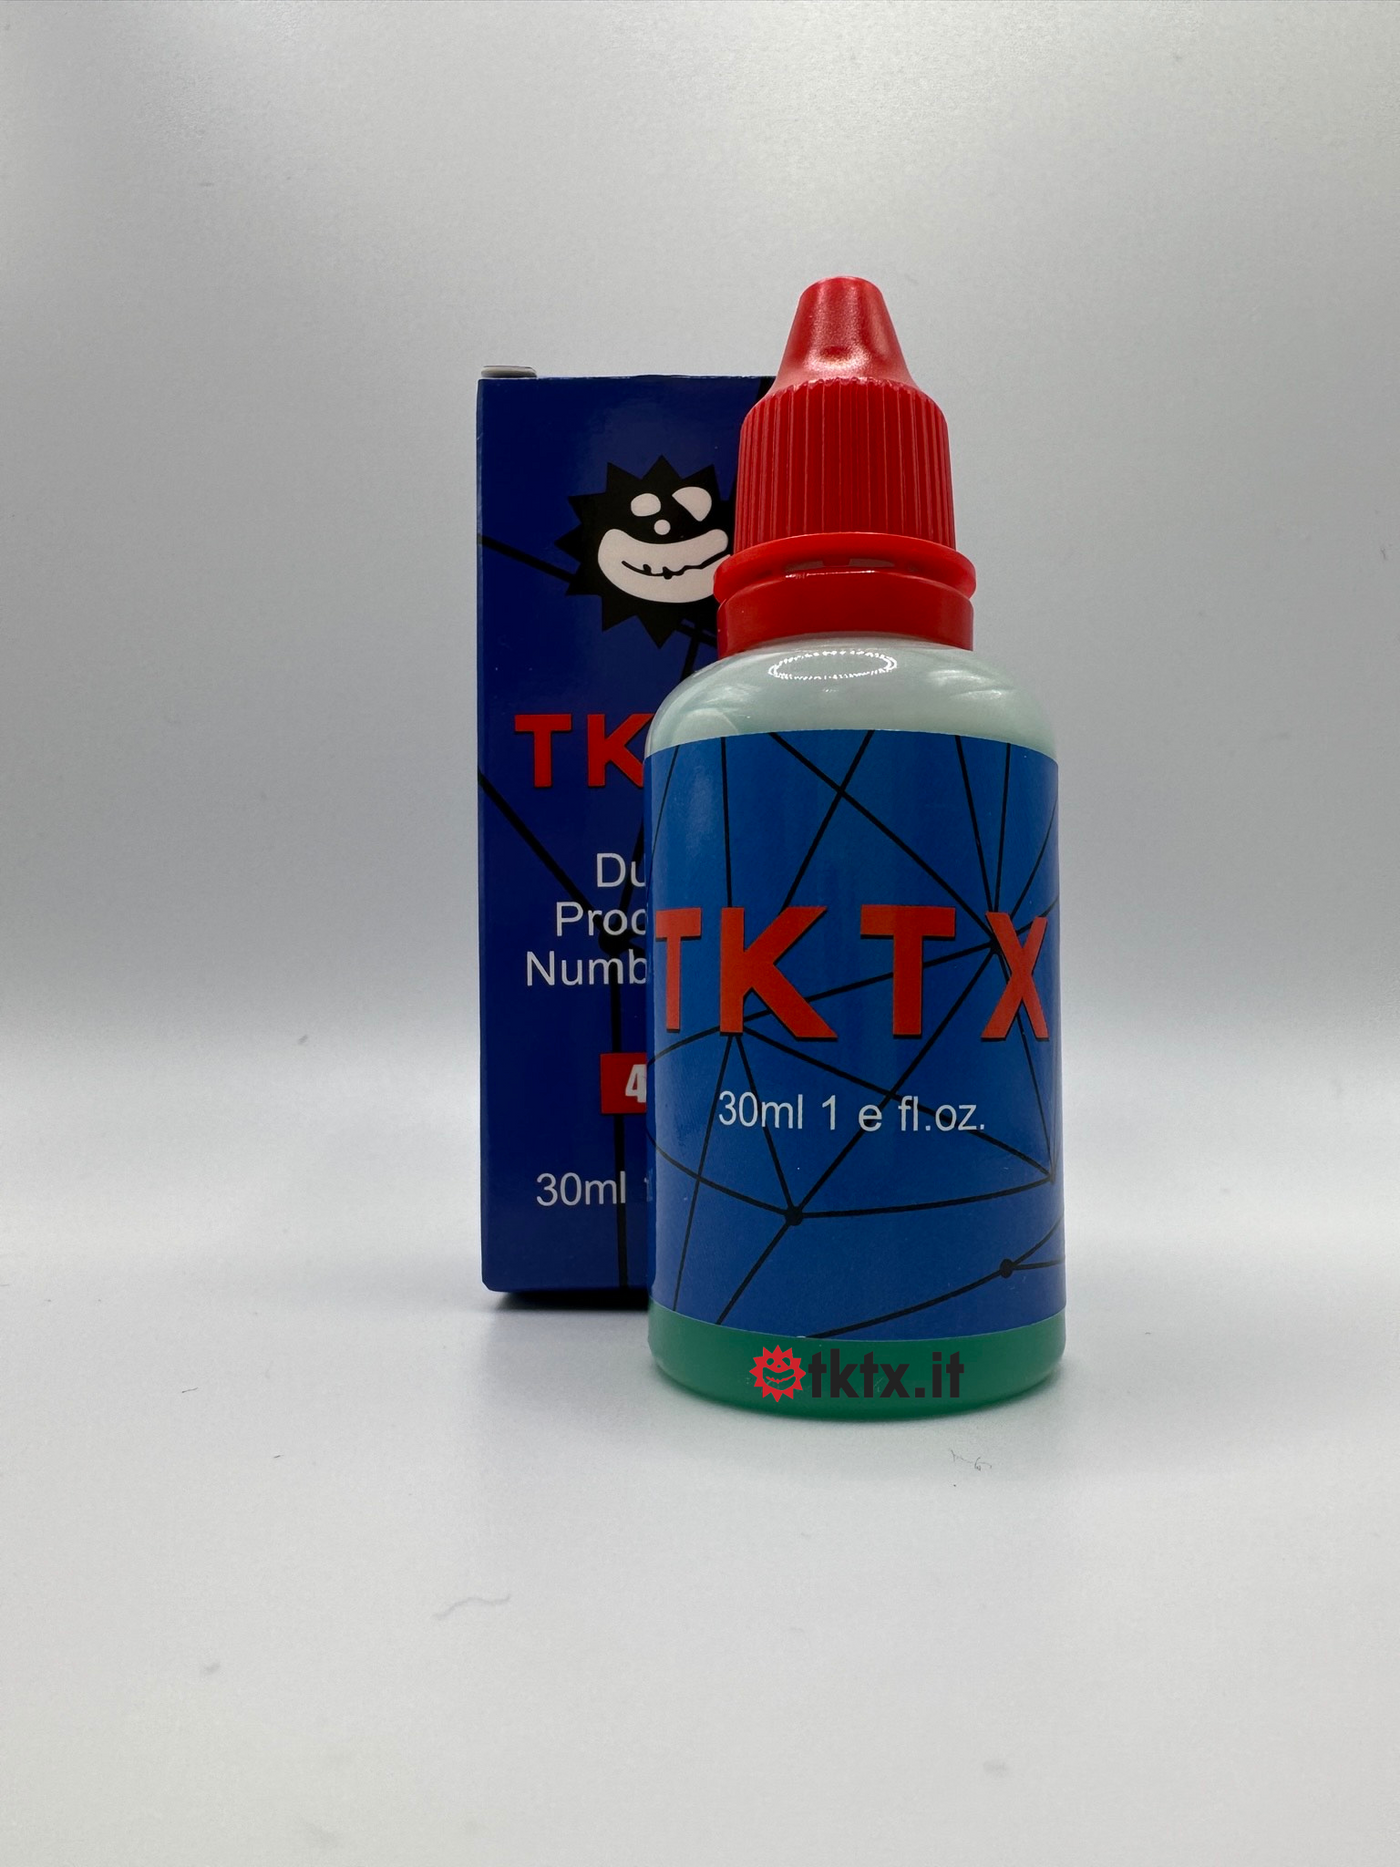 TKTX 40% - Numbing Gel - 30ML TKTX - Official Store